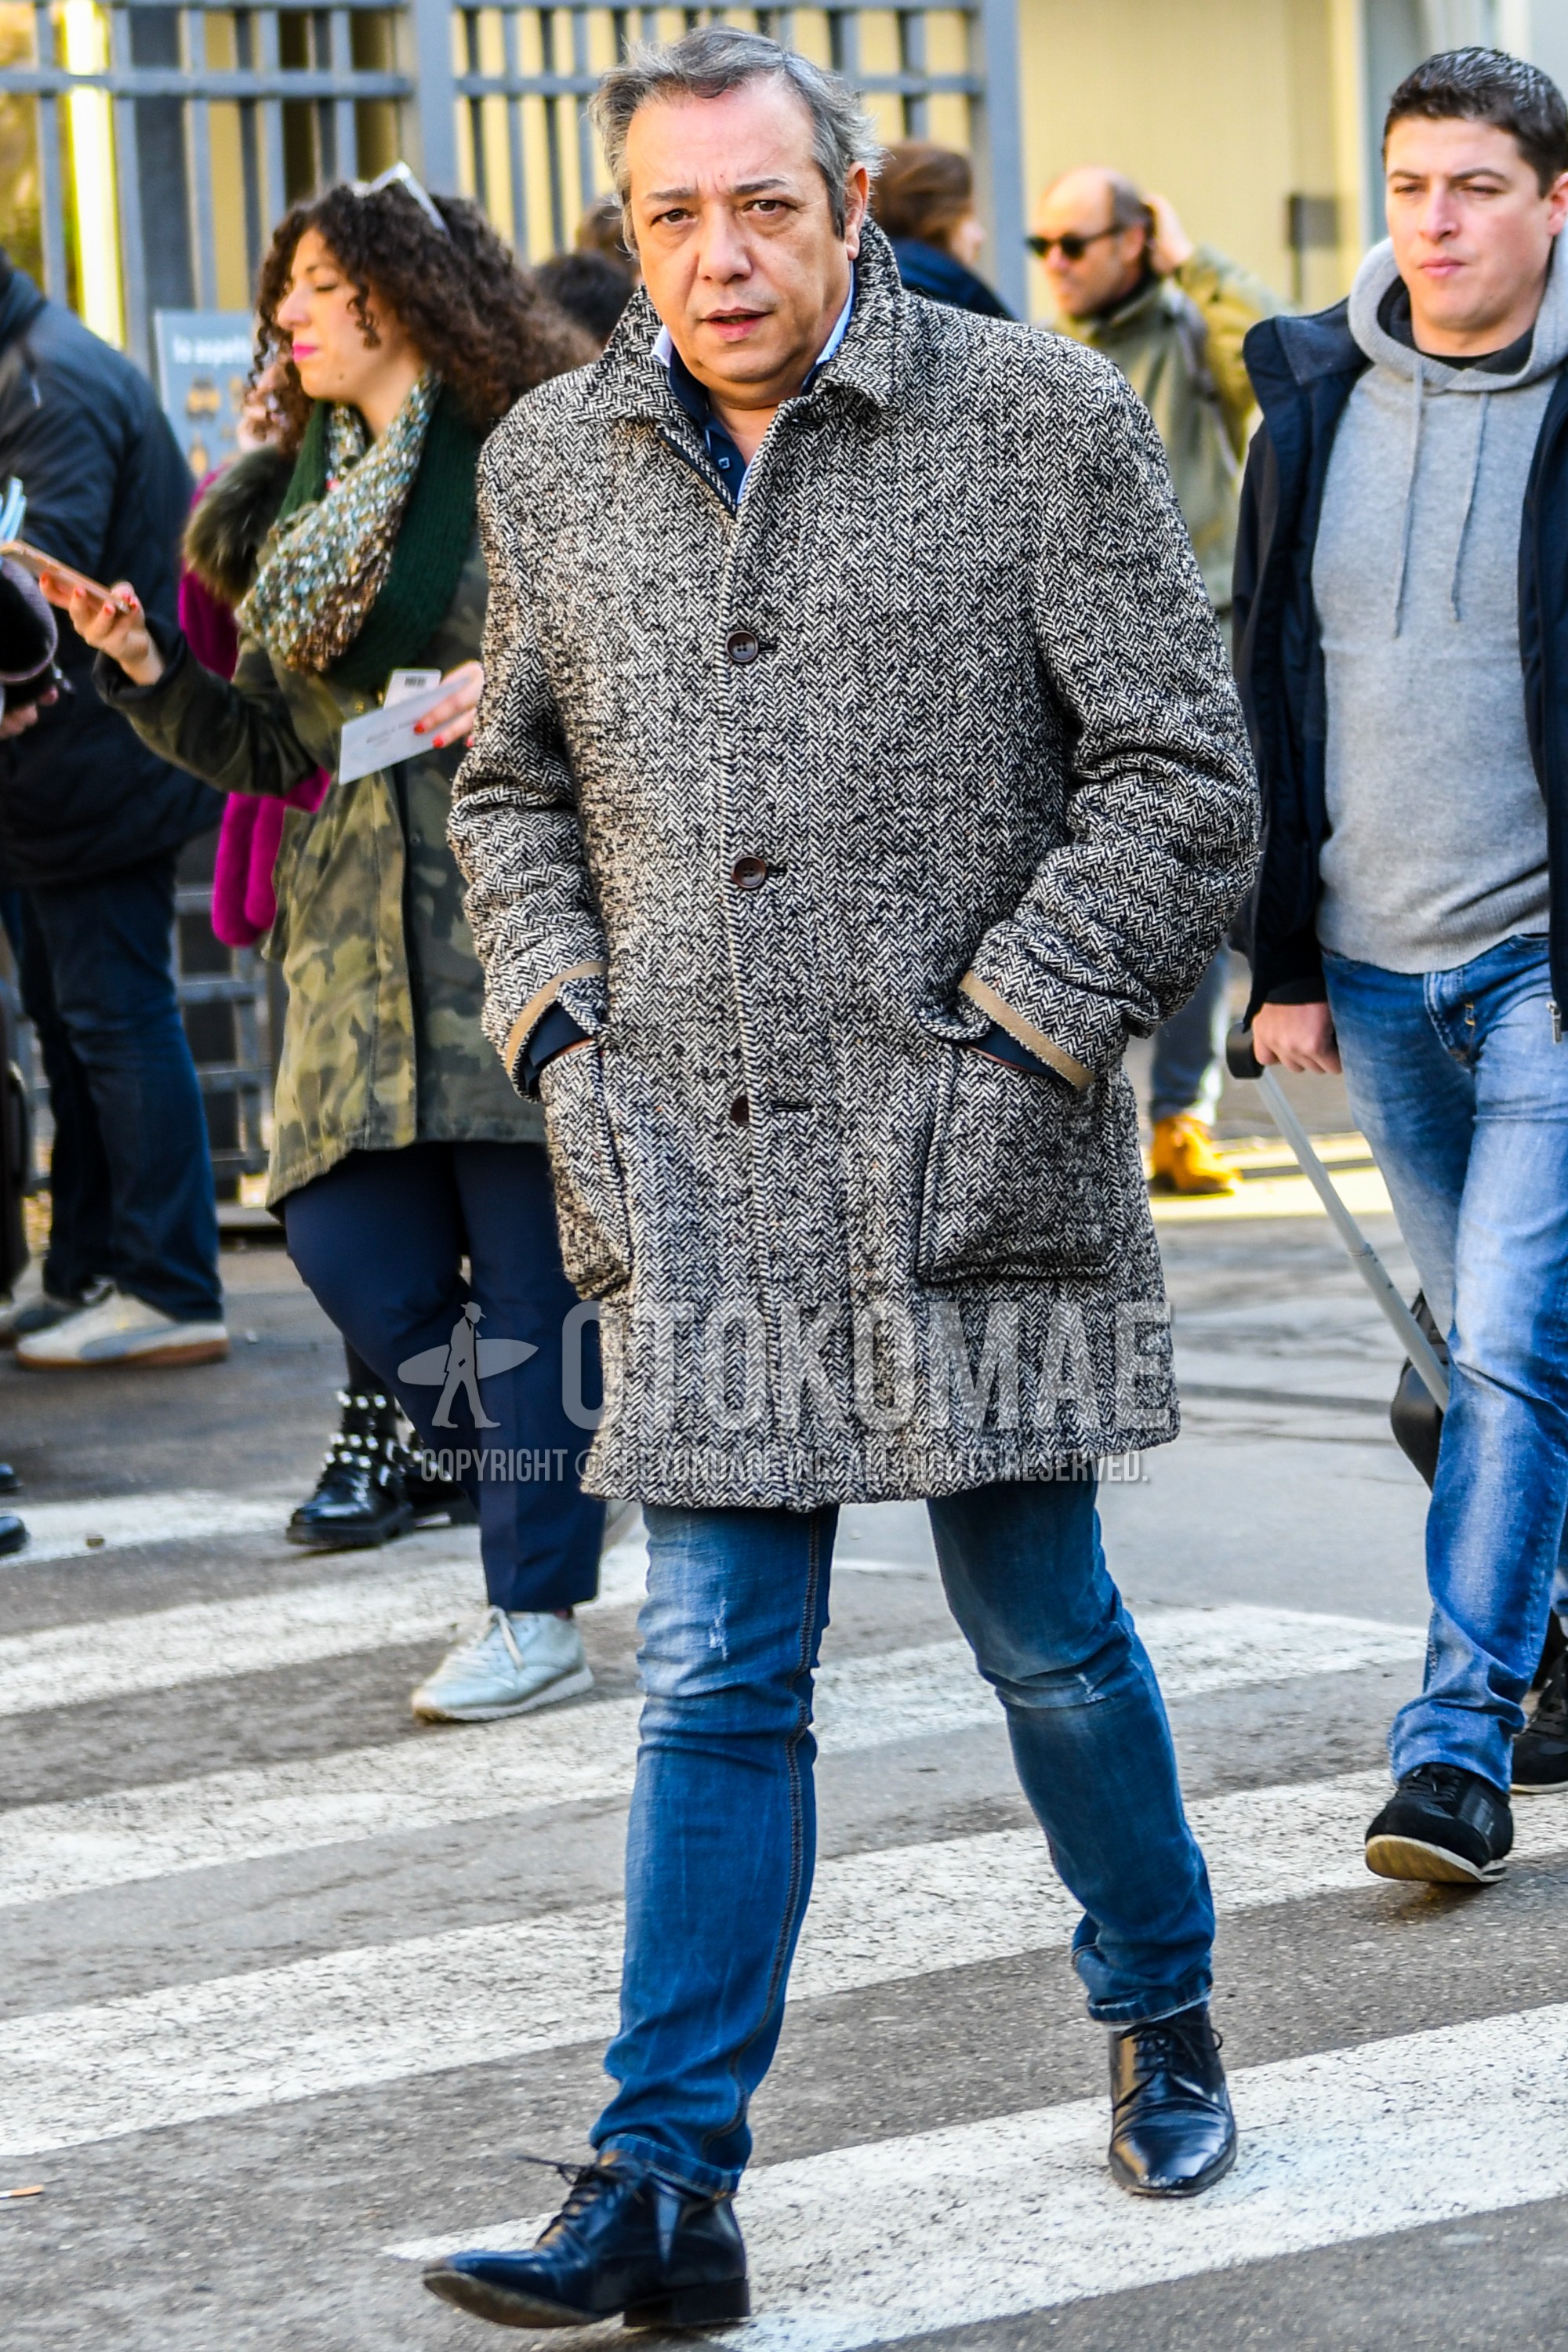 Men's autumn winter outfit with gray herringbone stenkarrer coat, blue plain denim/jeans, black plain toe leather shoes.